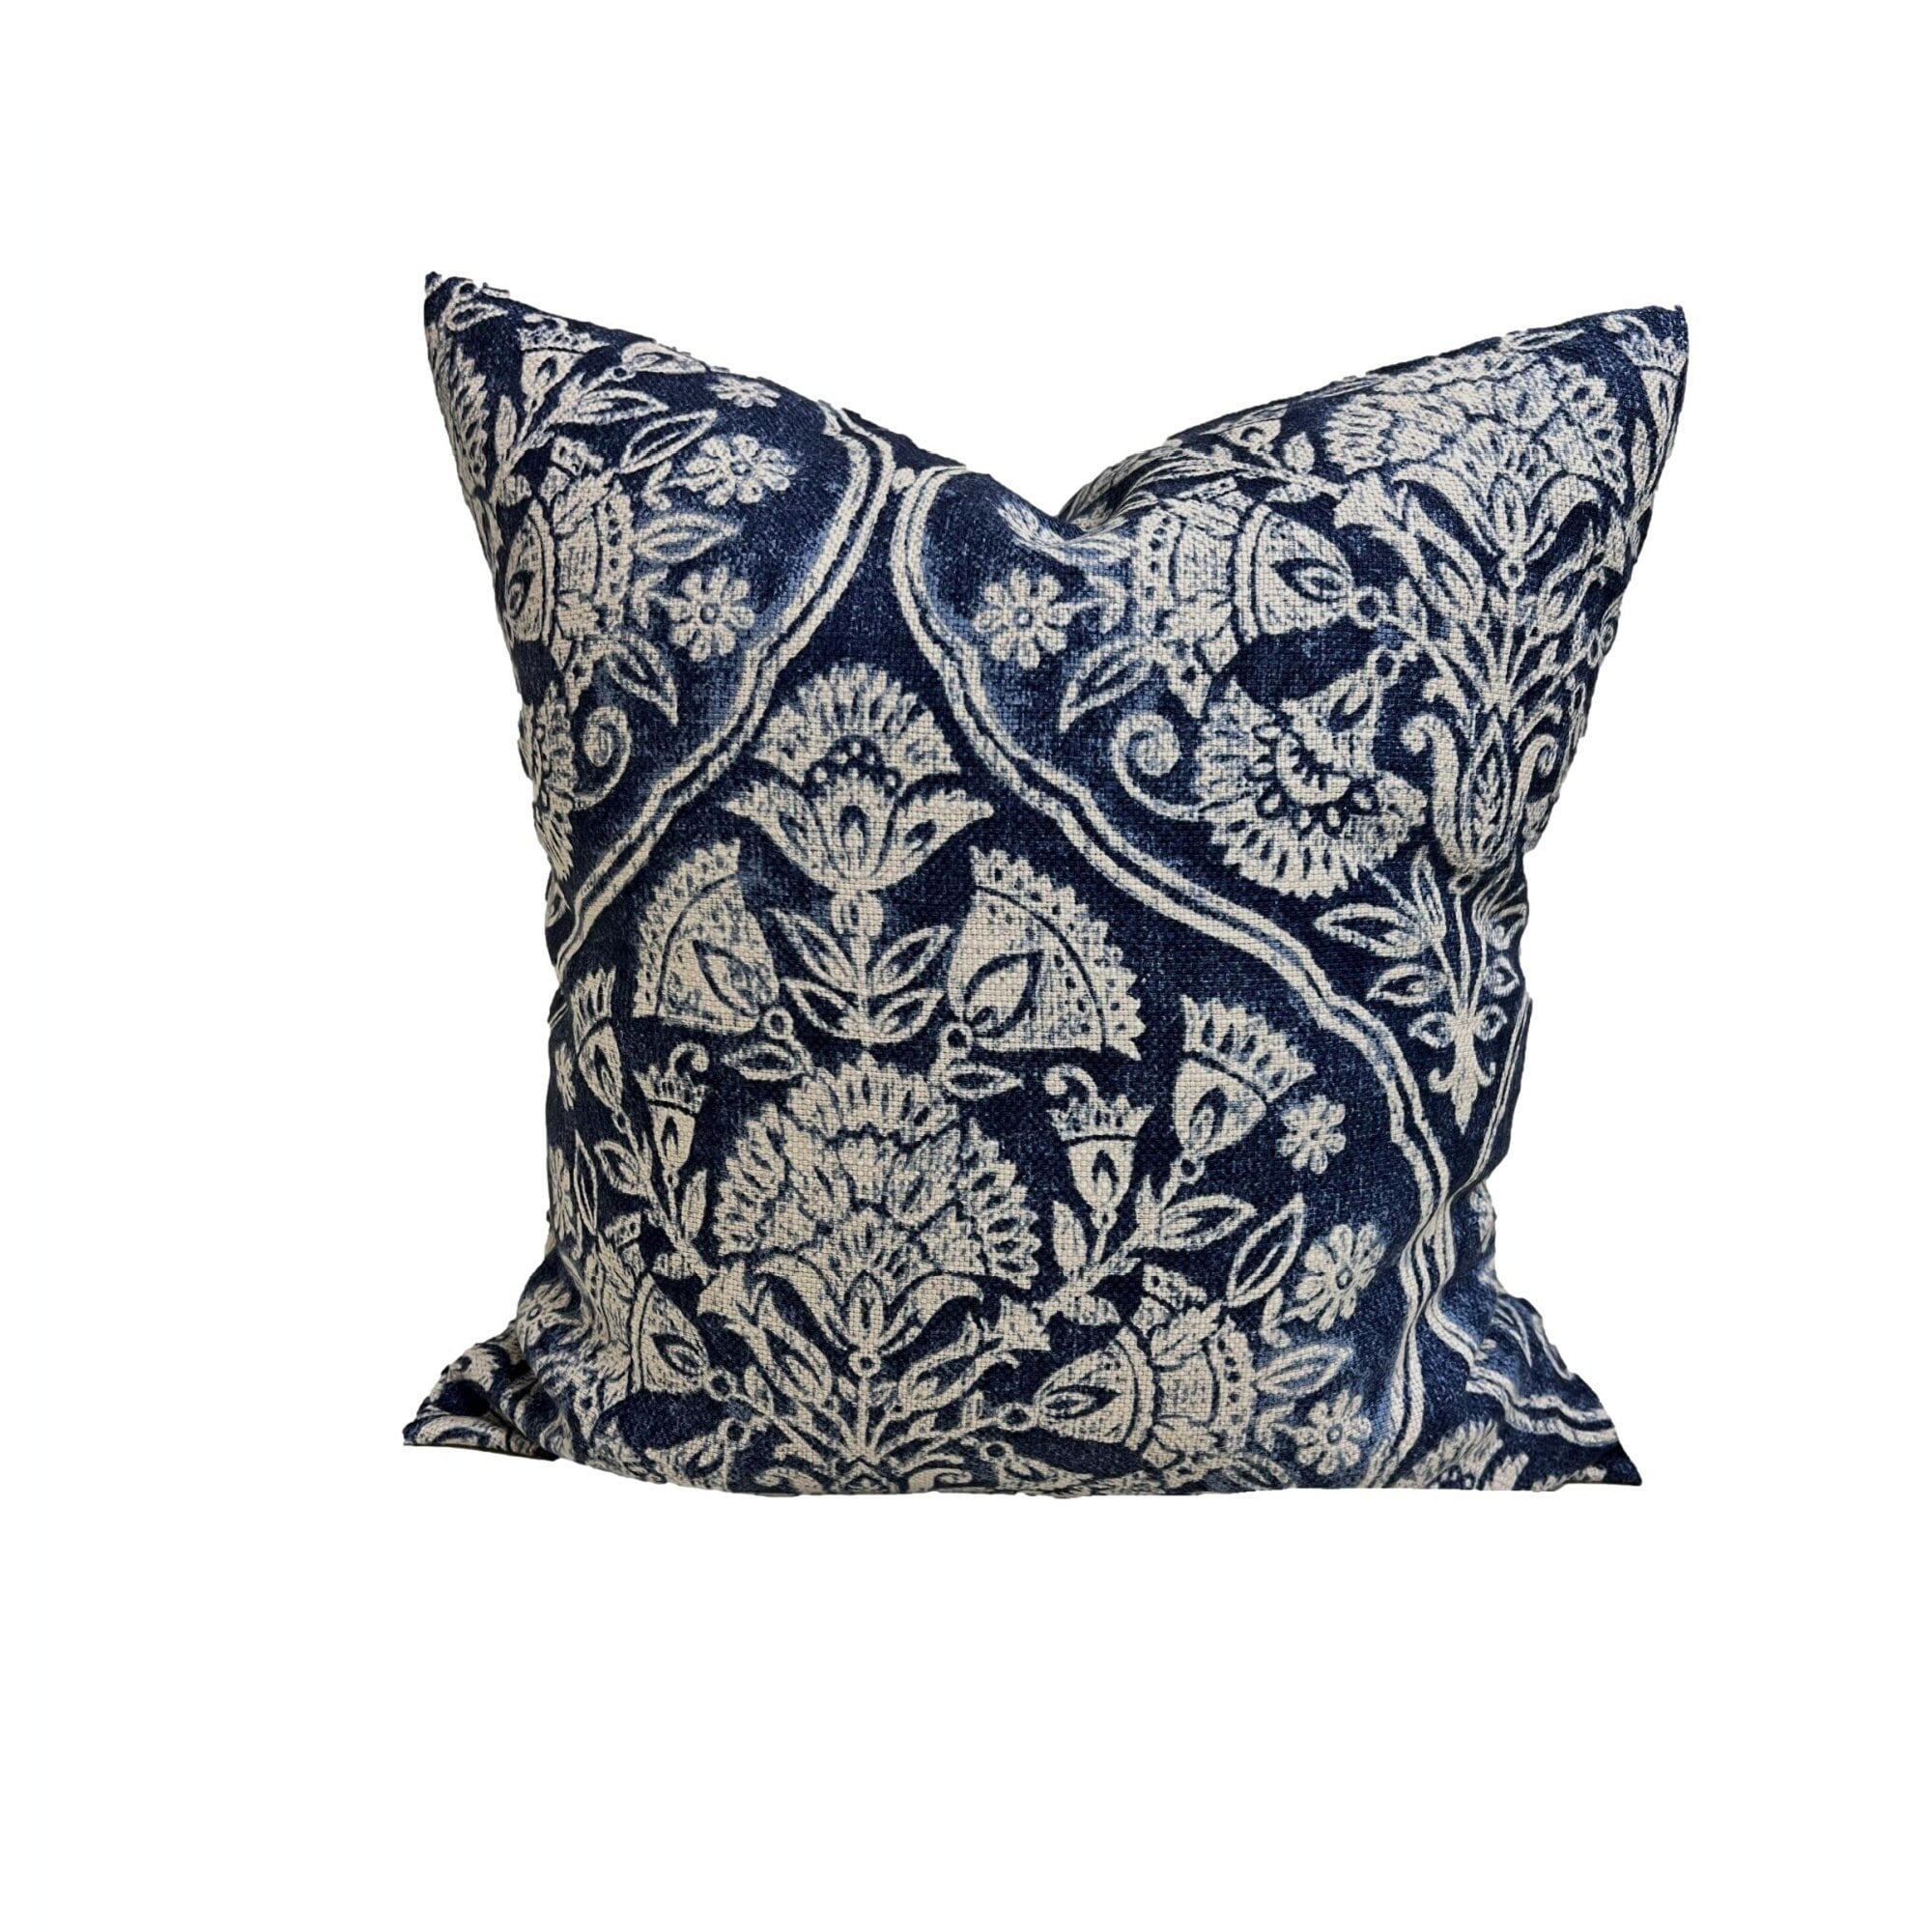 Indigo Moon Ghostly Embroidery Throw Pillow - 18x18”, Down